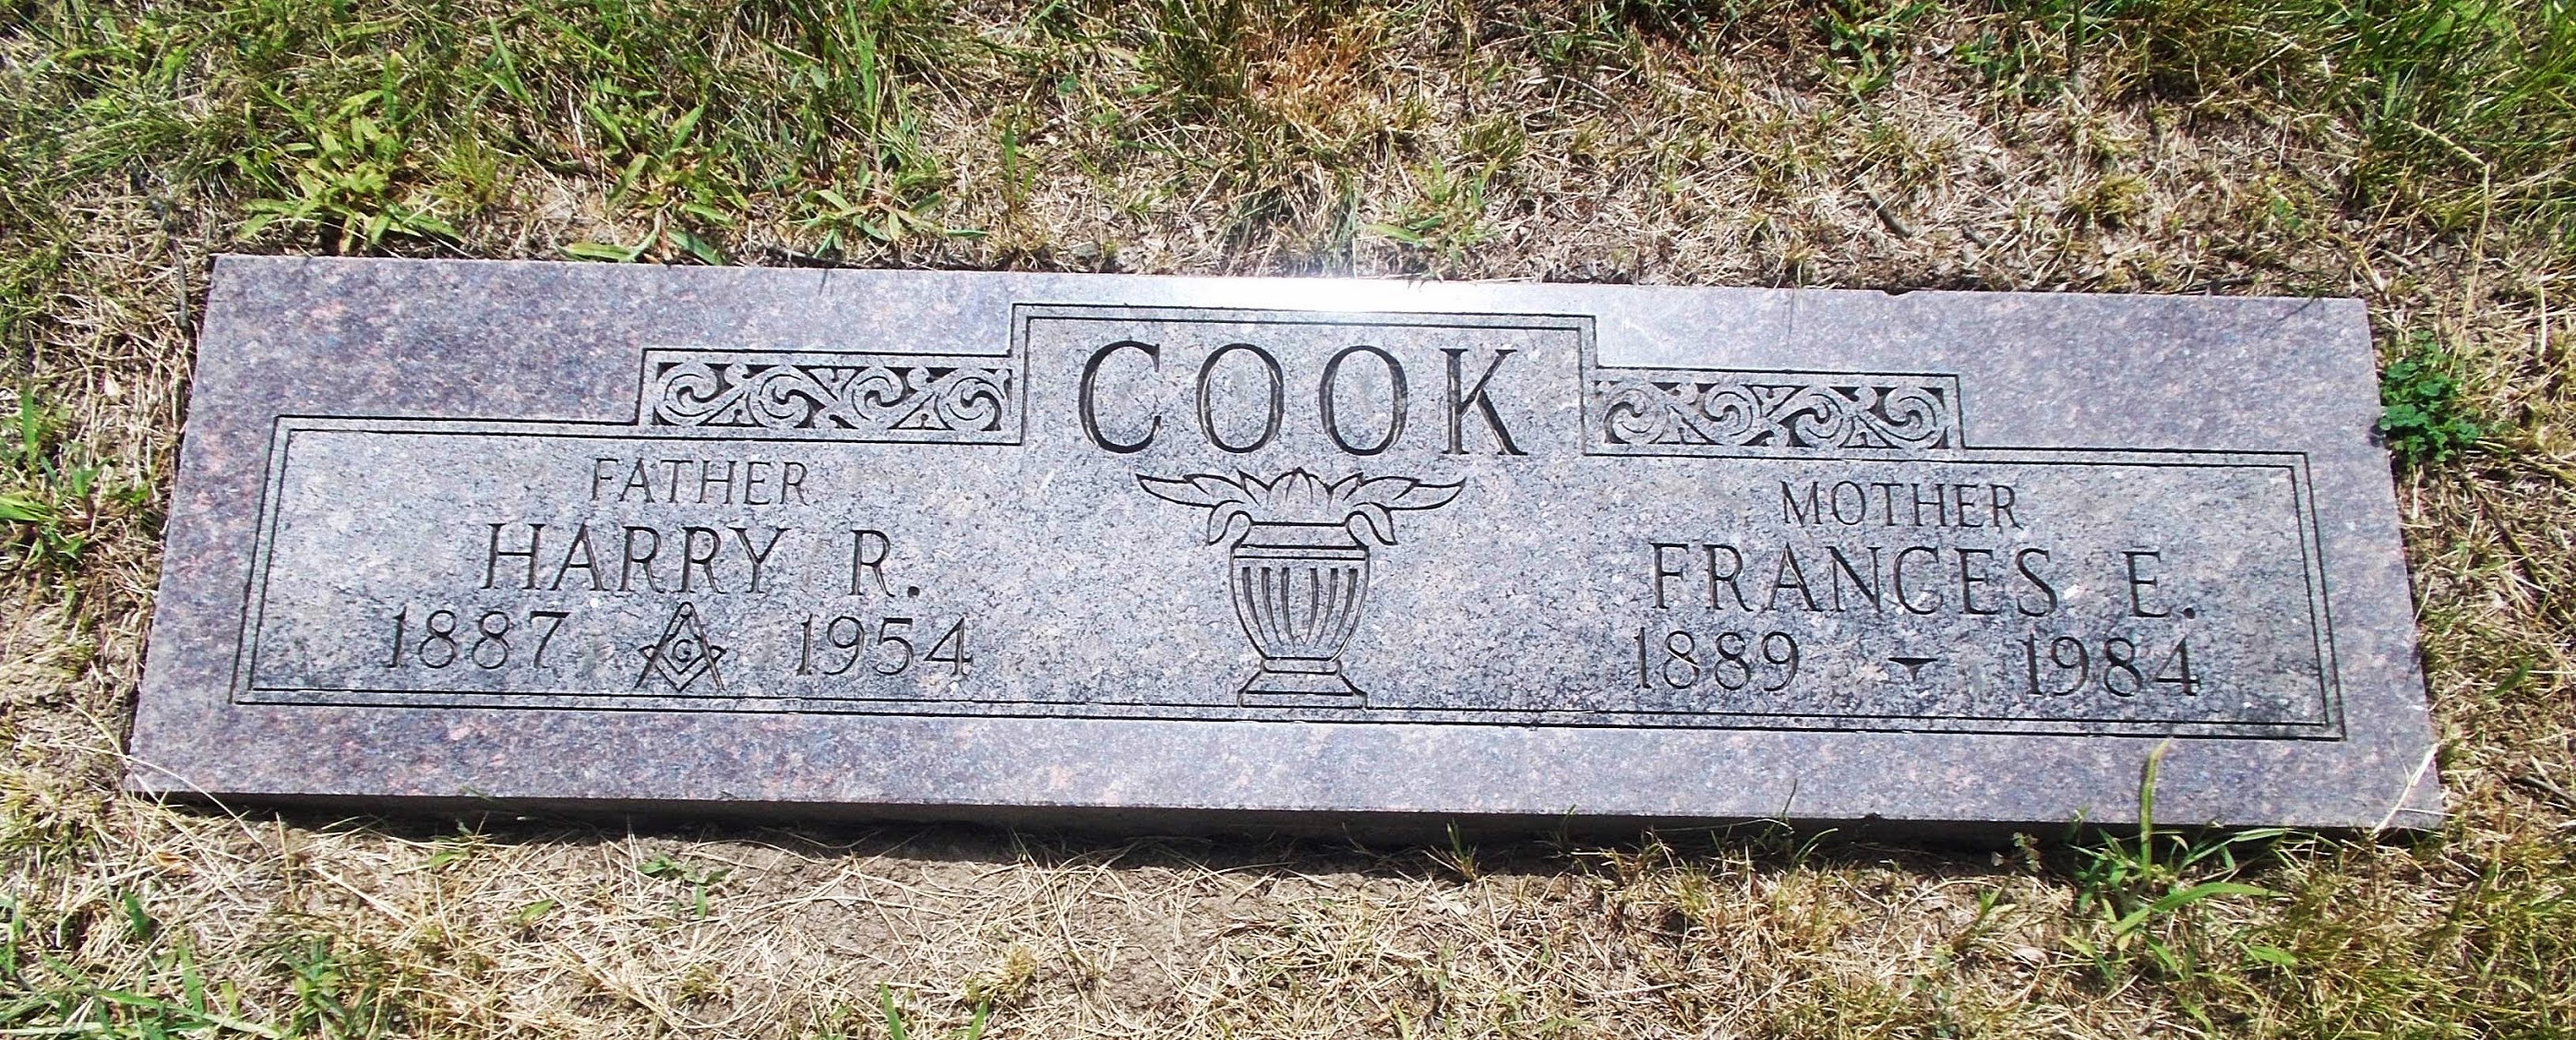 Harry R Cook